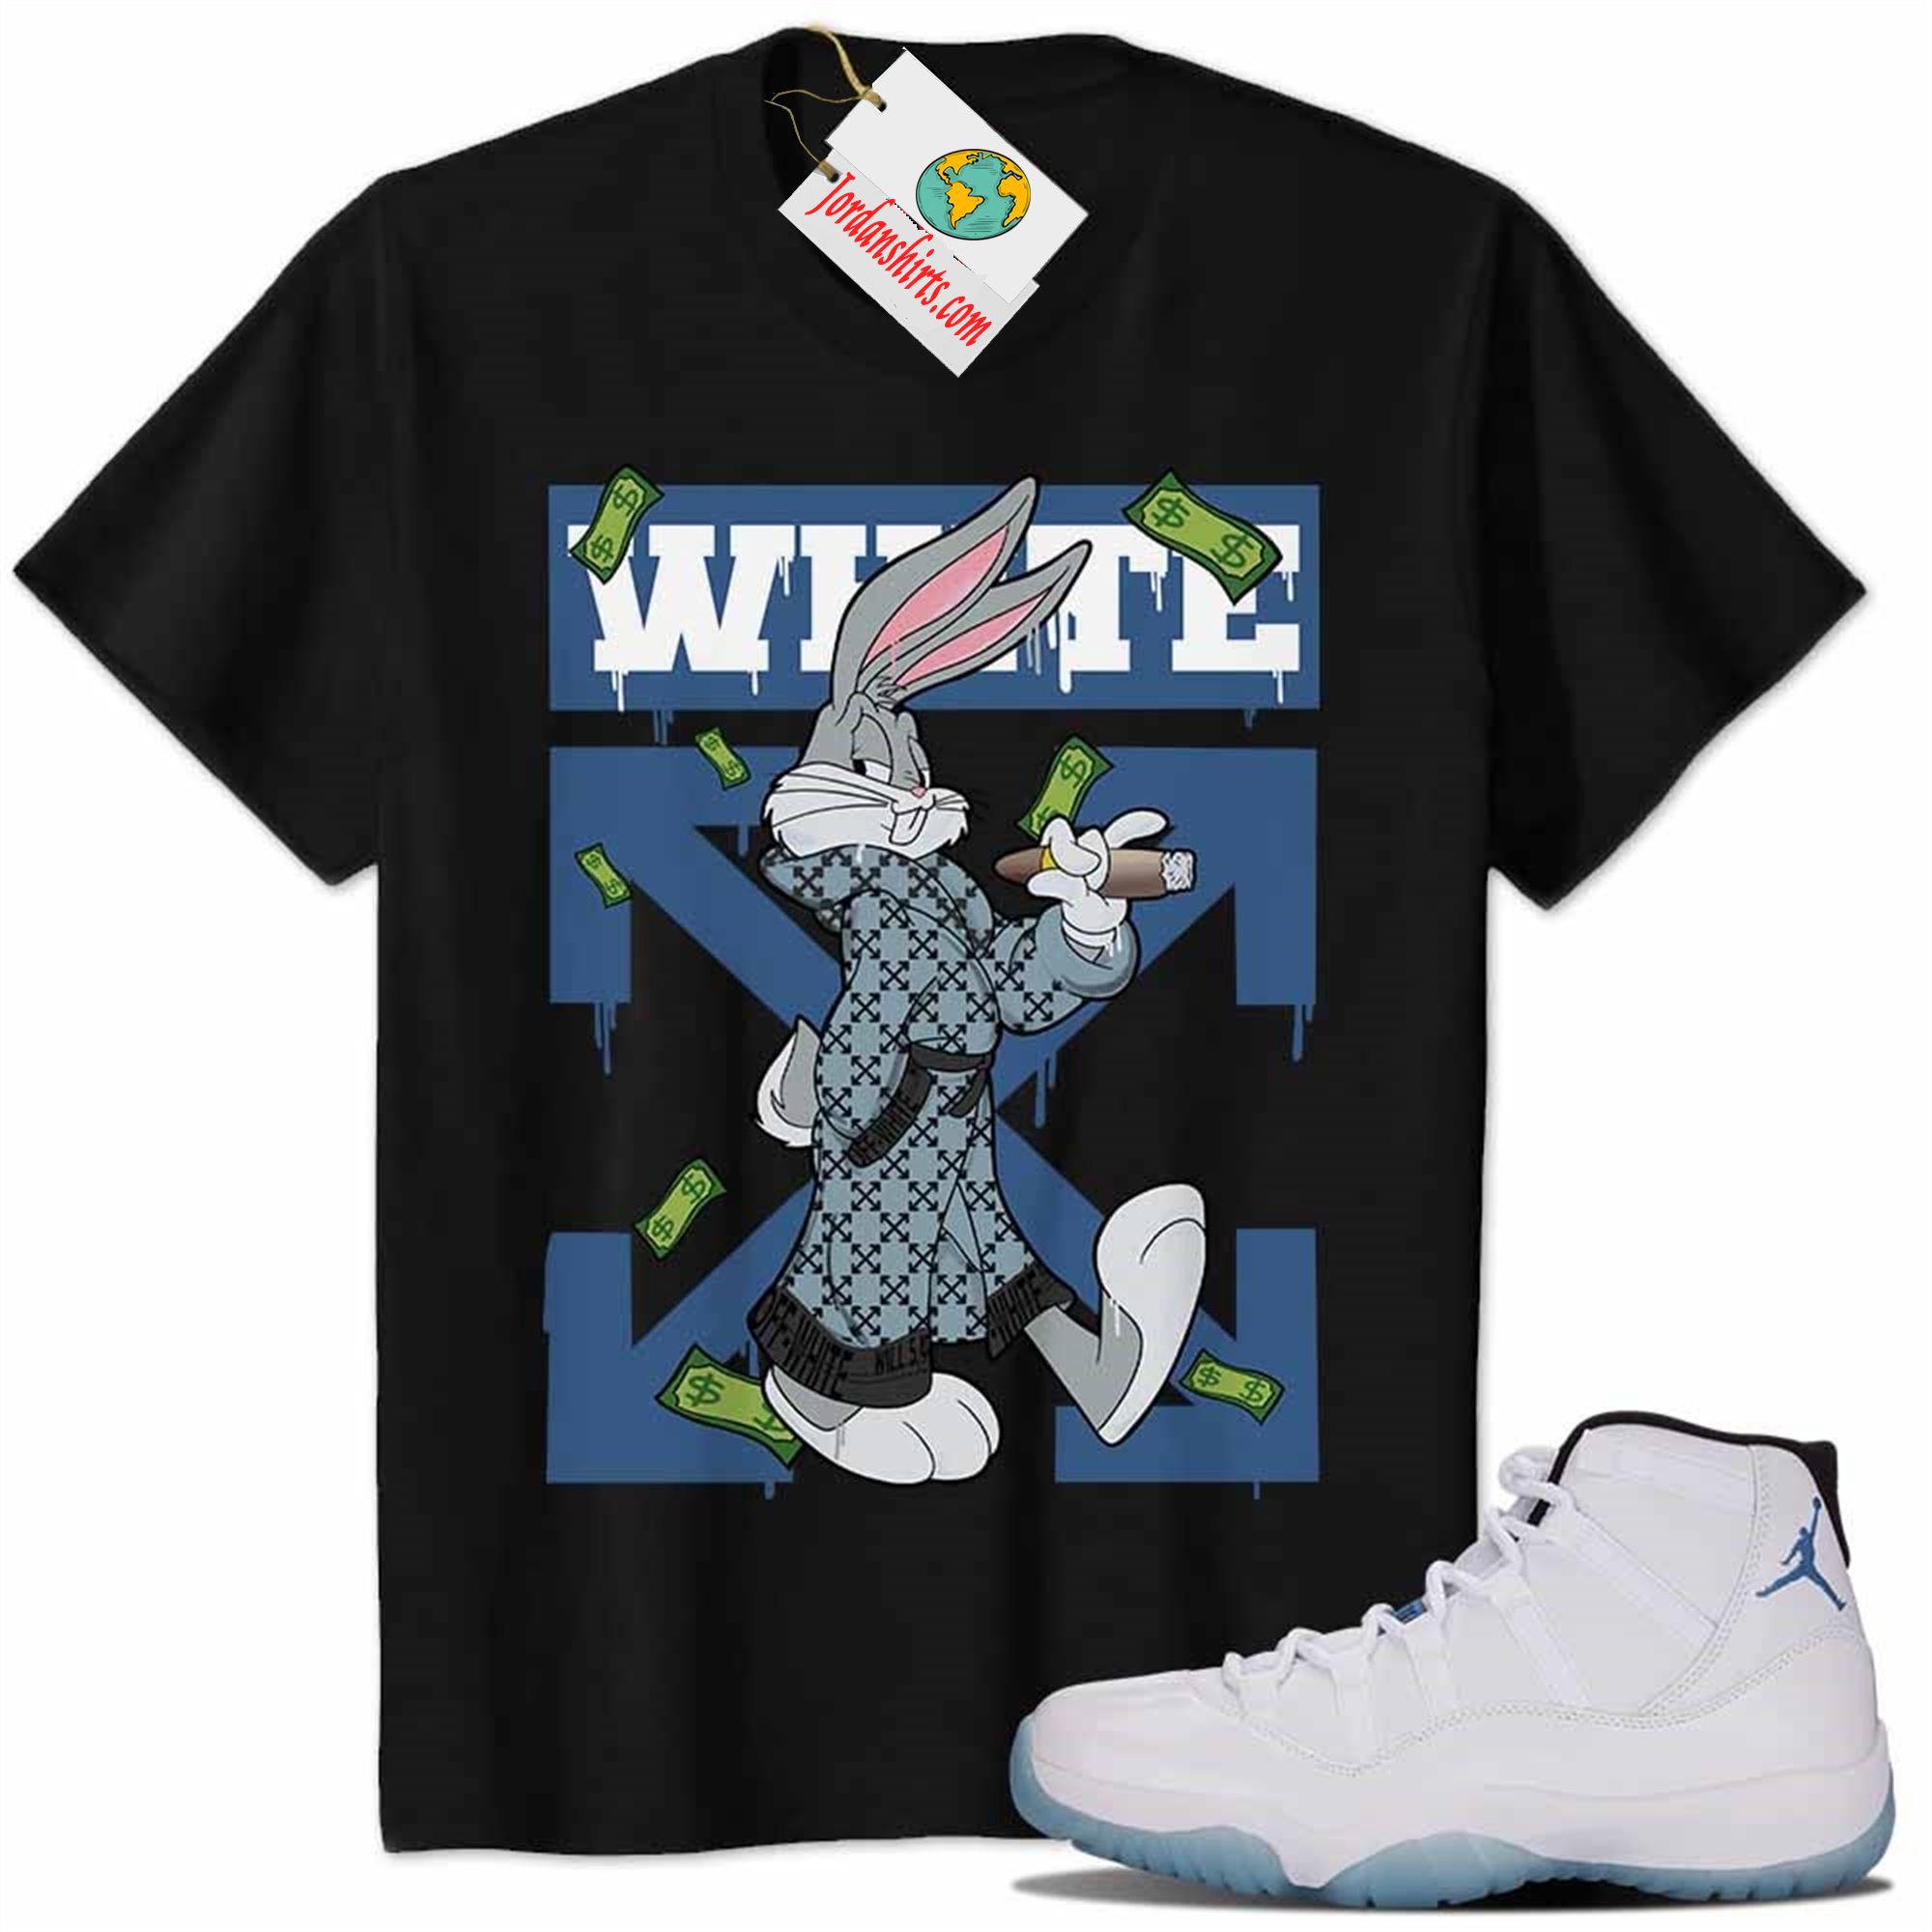 Jordan 11 Shirt, Jordan 11 Legend Blue Shirt Bug Bunny Smokes Weed Money Falling Black Plus Size Up To 5xl